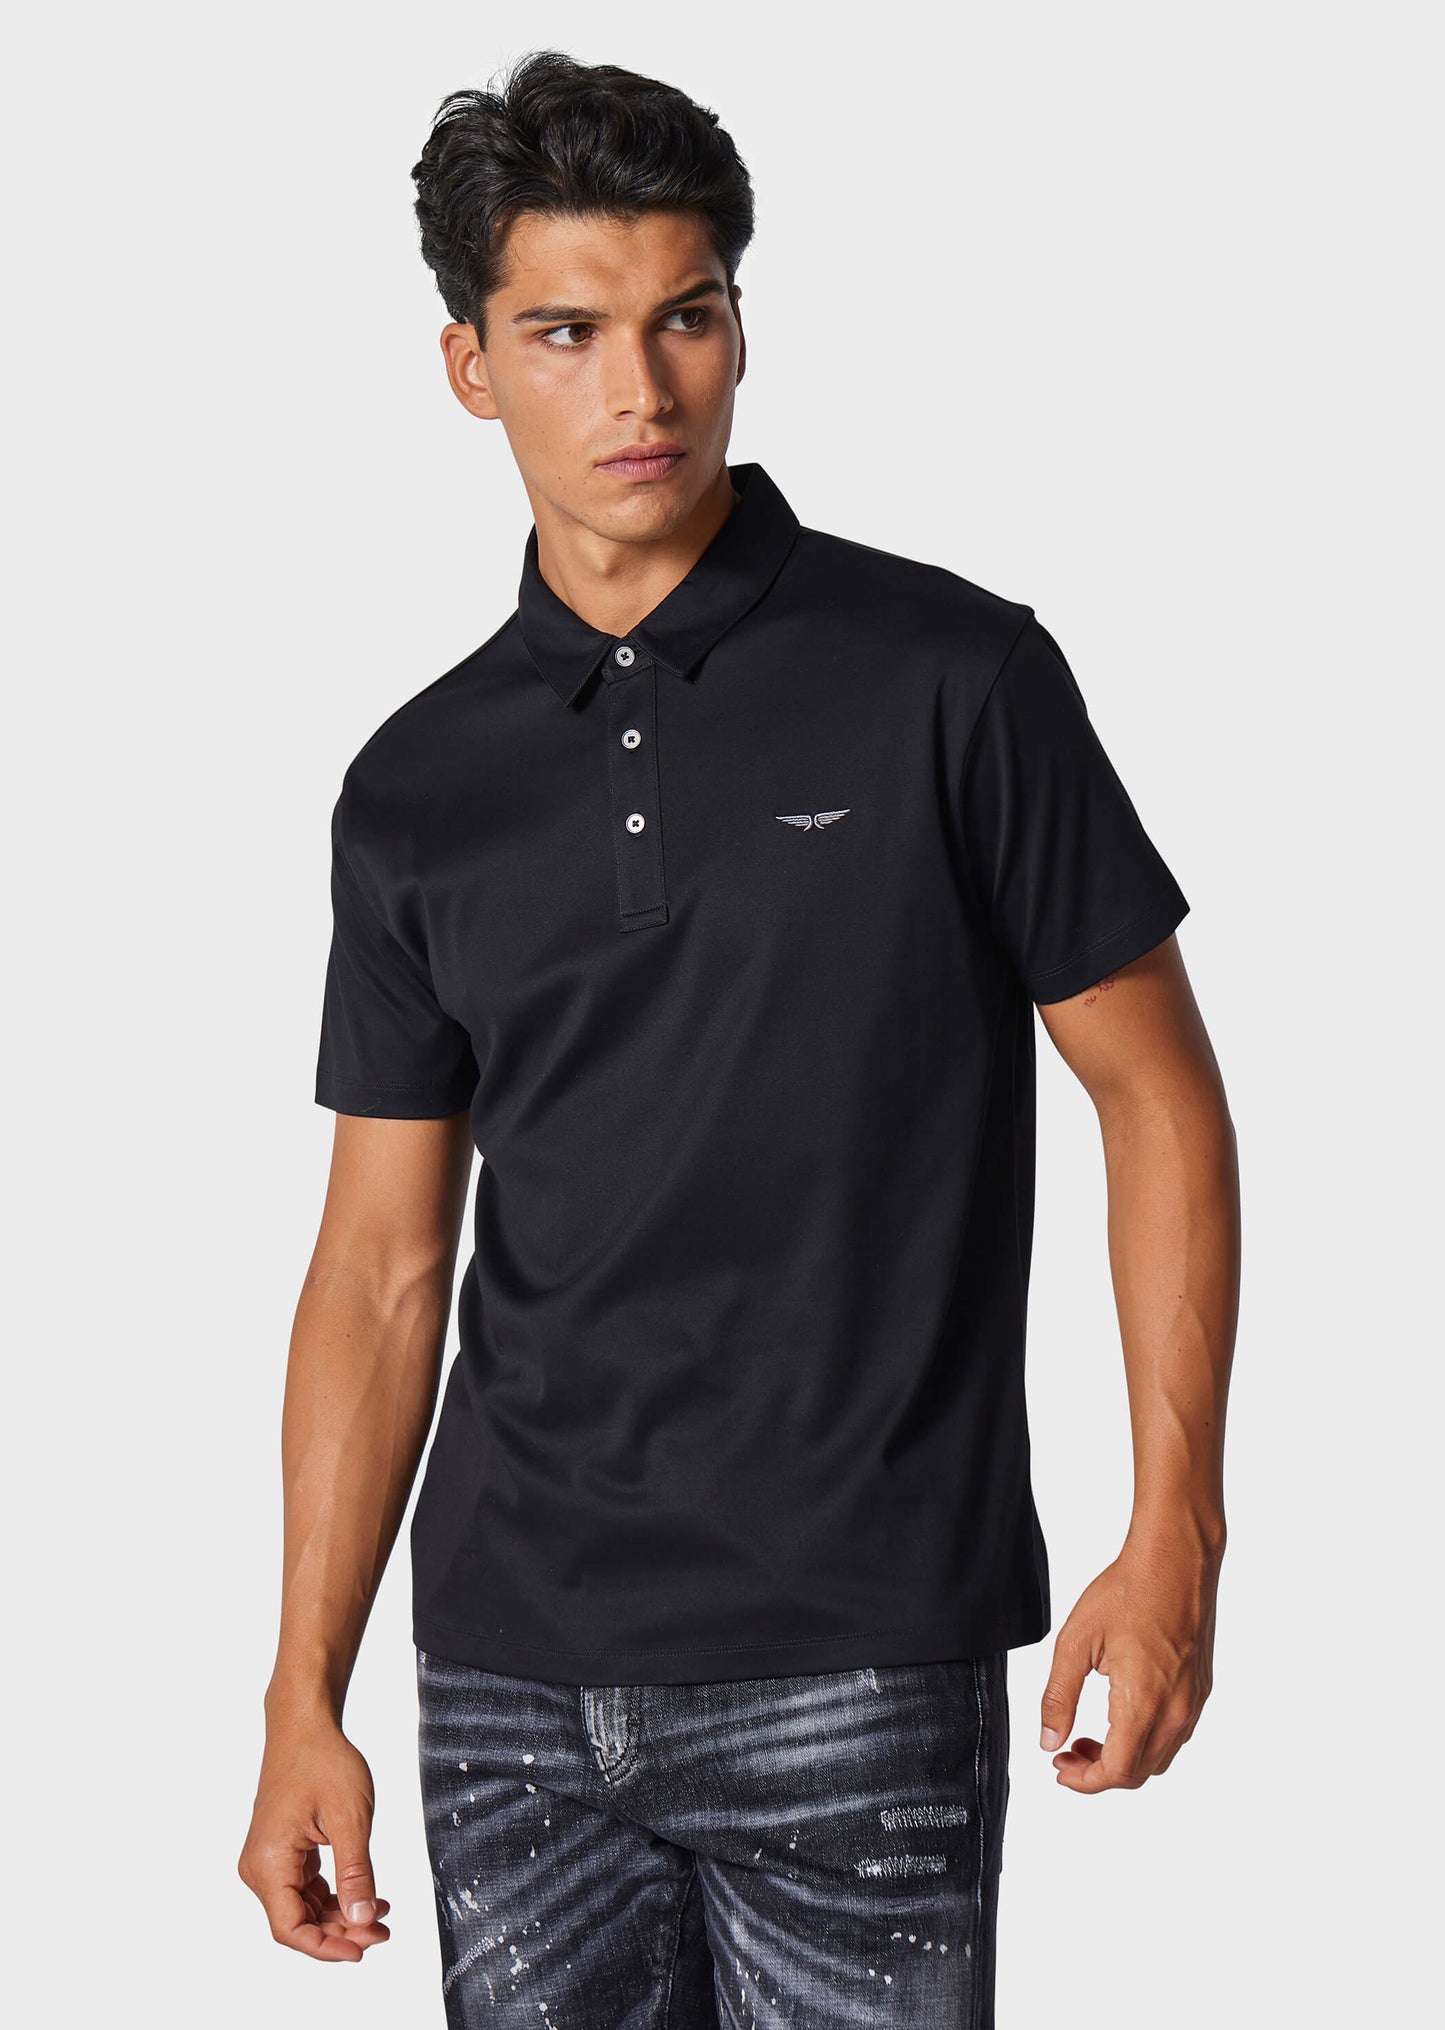 Leytun Black Polo Shirt